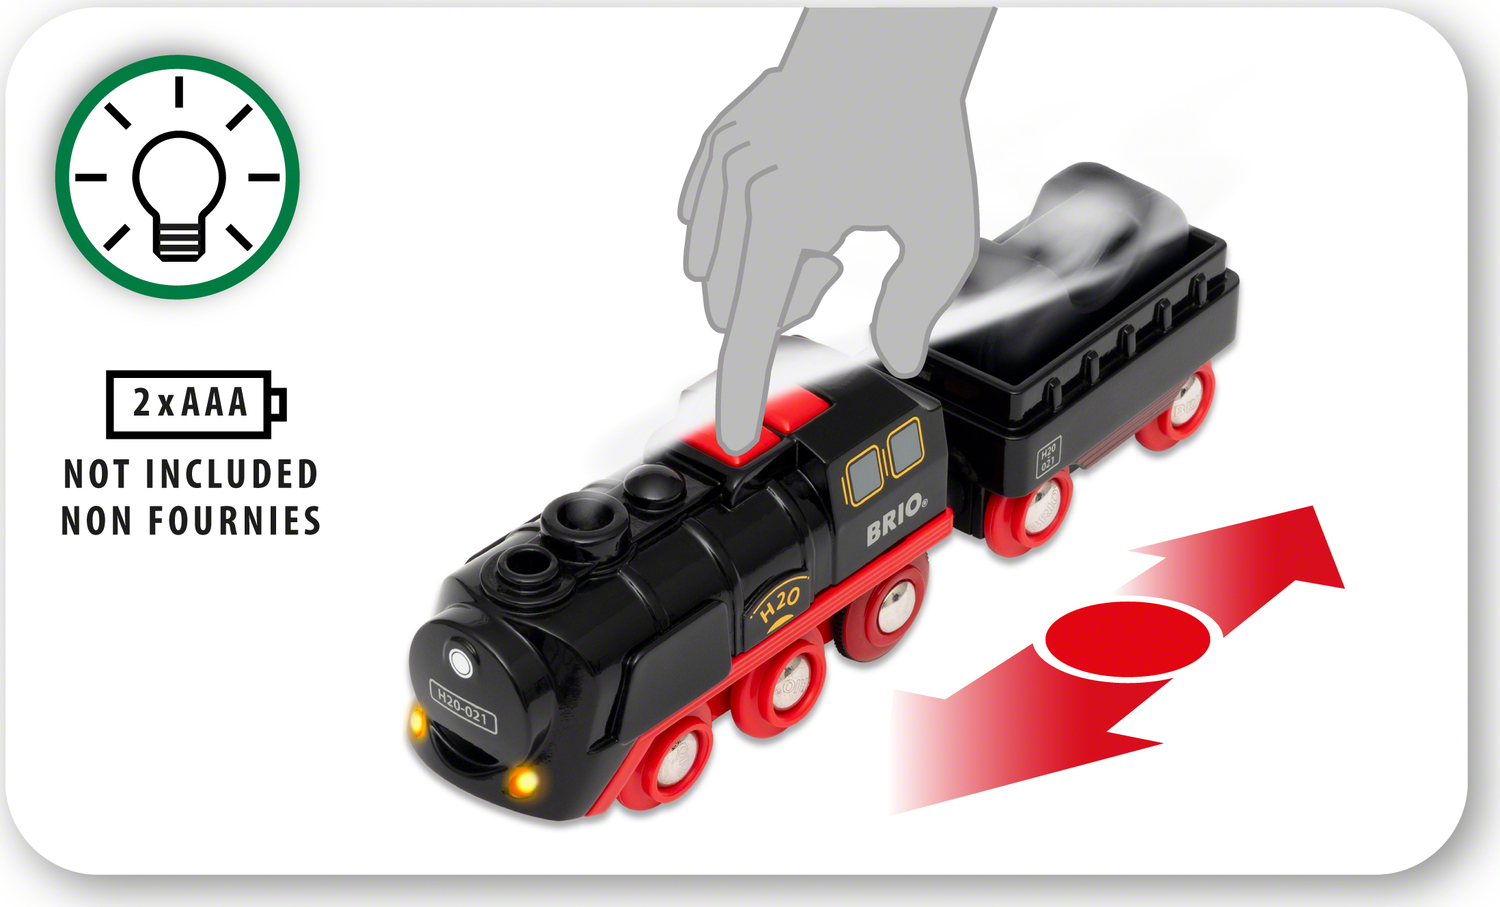 BRIO Battery Operated Steam Train - Imagination Toys